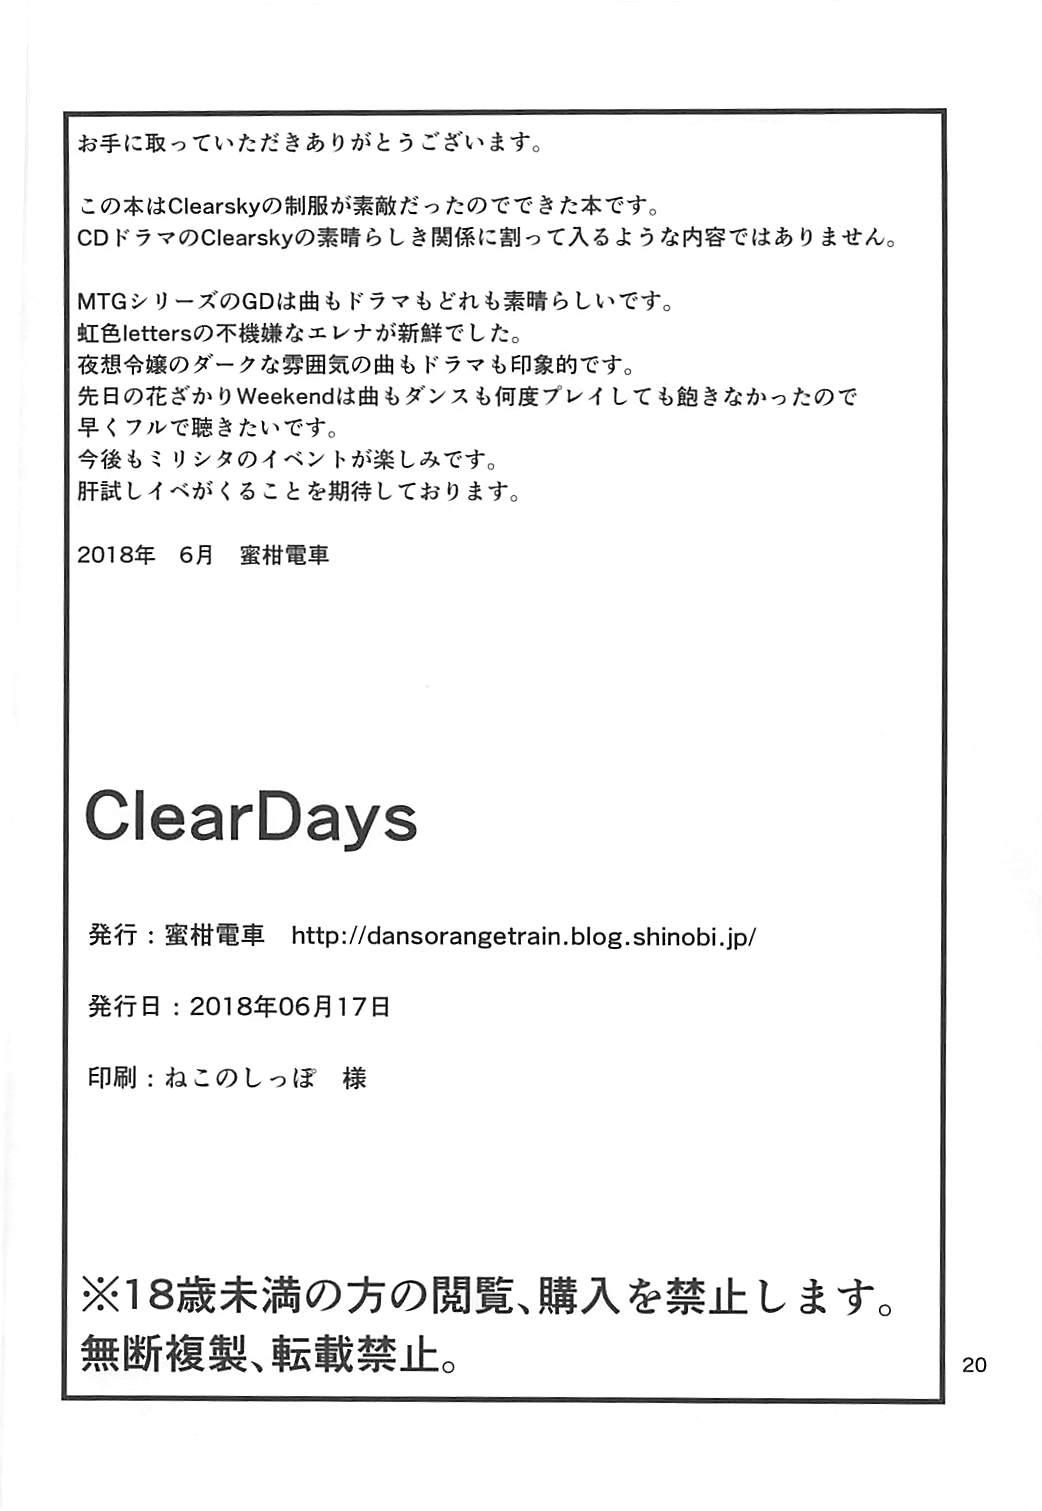 ClearDays 20